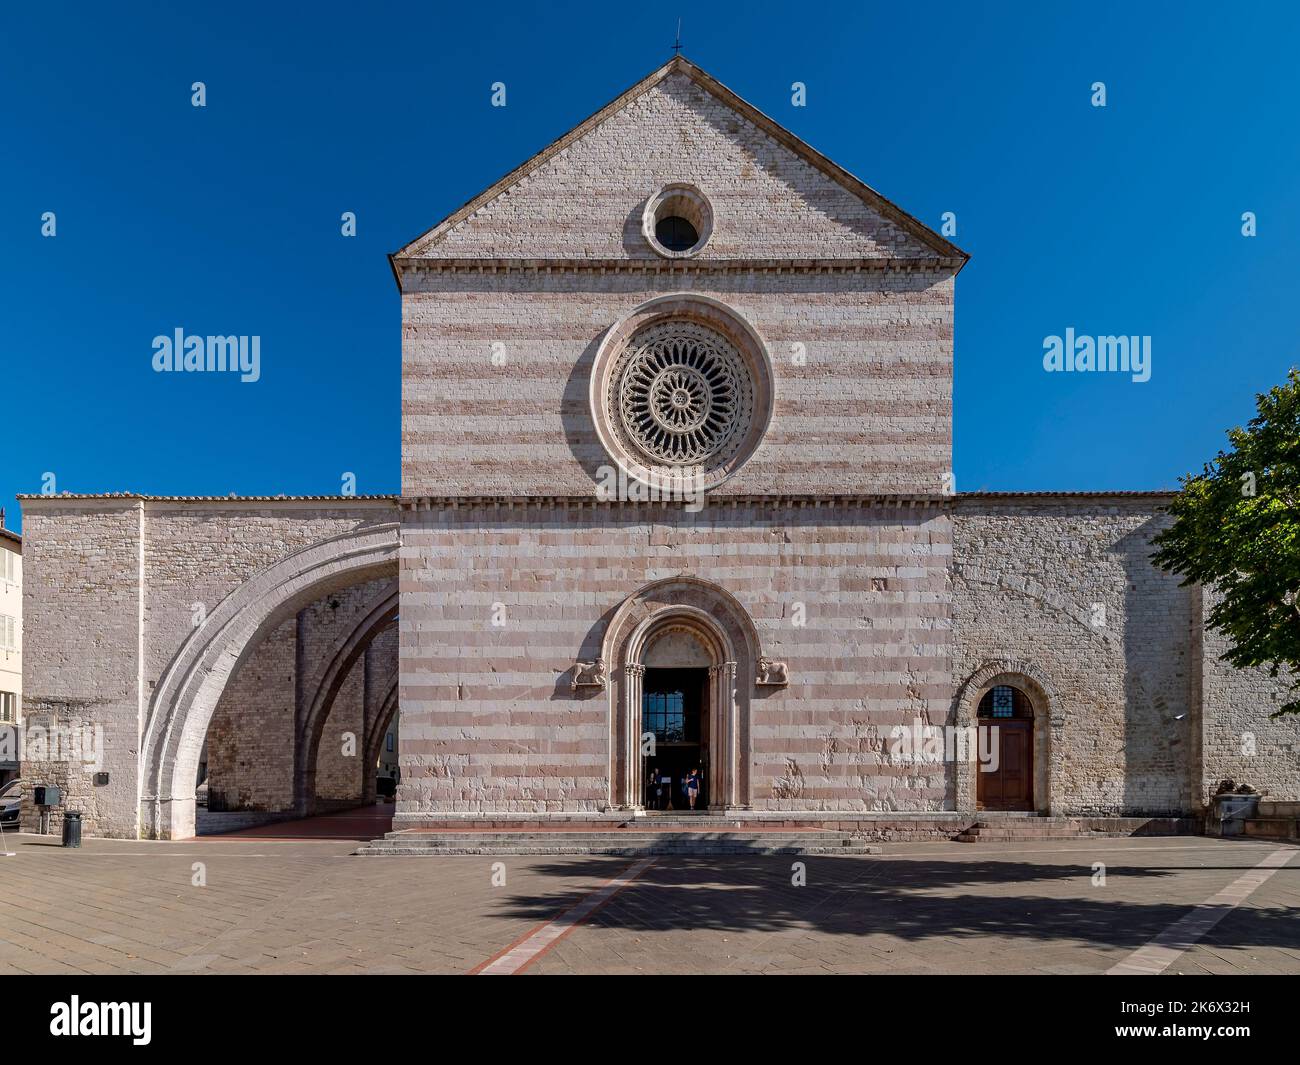 Die alte Basilika von Santa Chiara, Assisi, Perugia, Italien, an einem sonnigen Tag Stockfoto